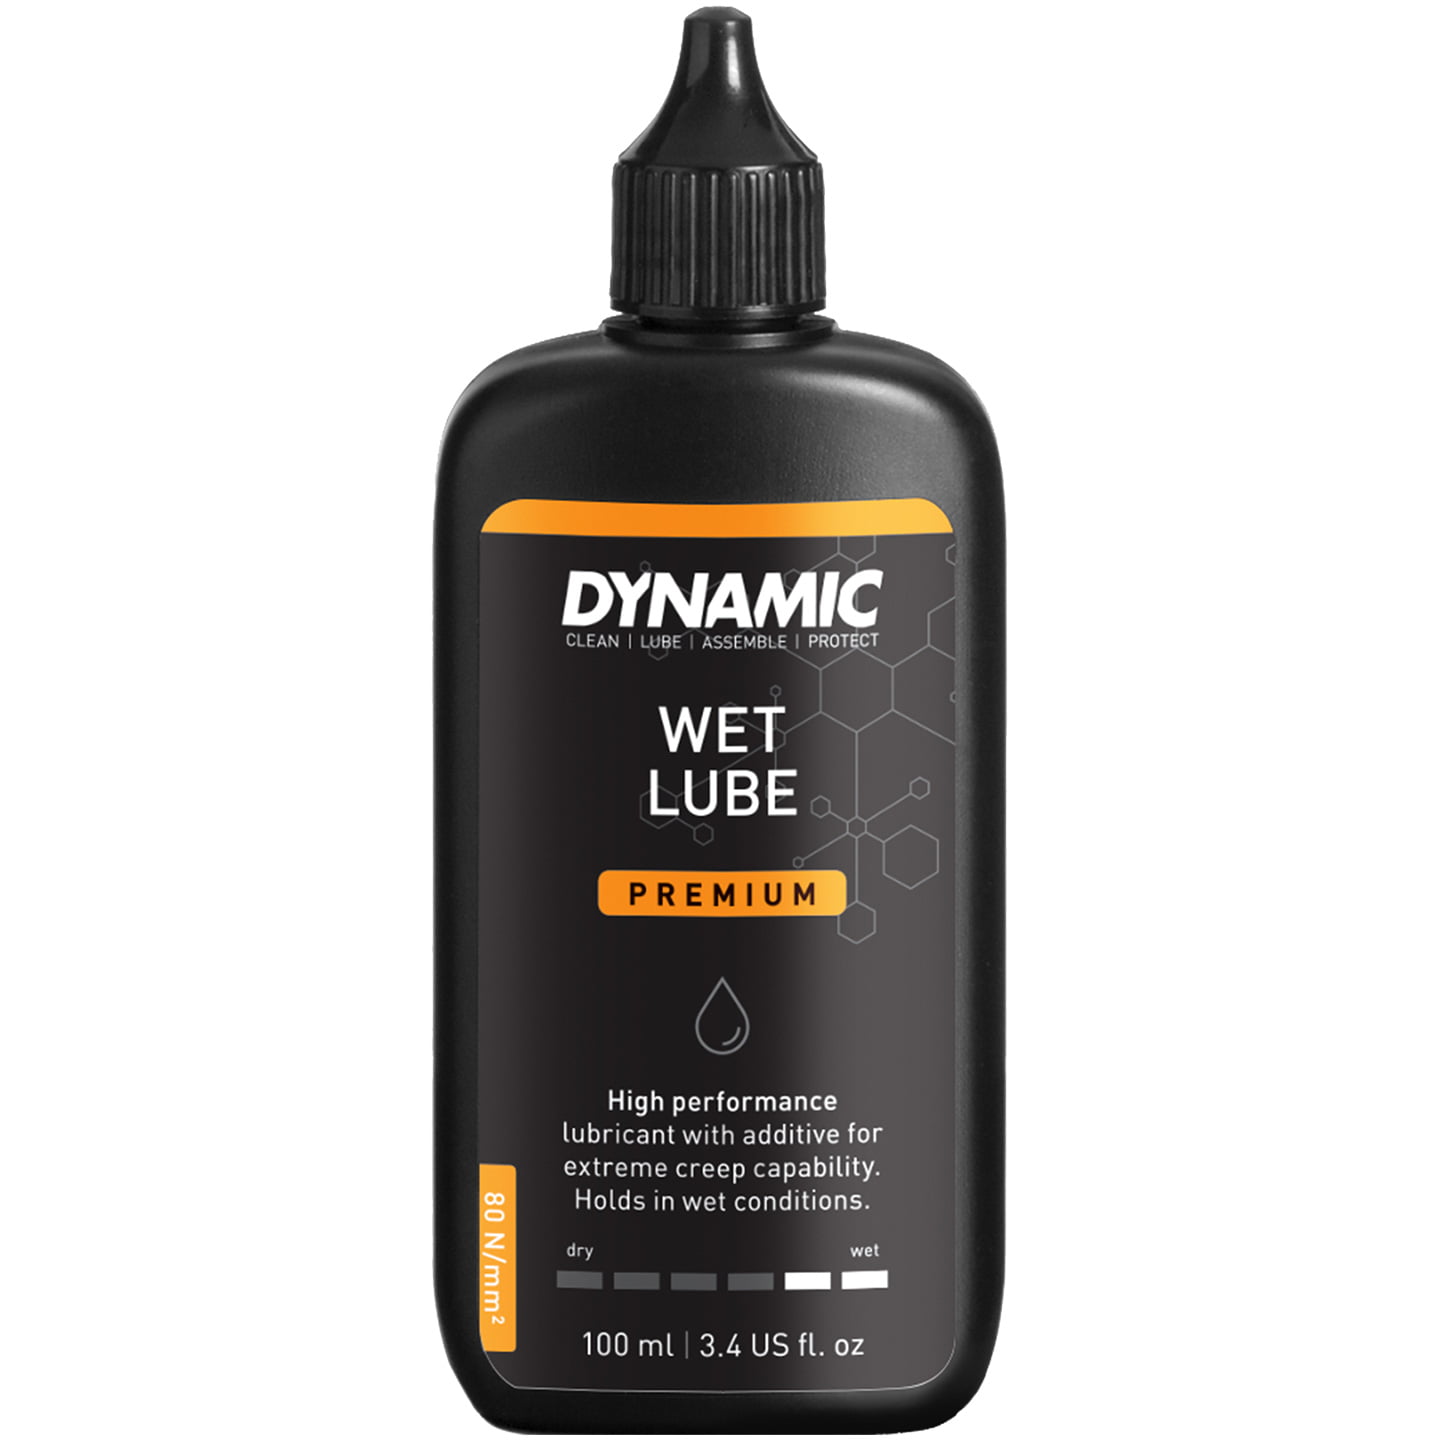 DYNAMIC Wet Lube 100ml Bottle Chain Lube, Bike accessories